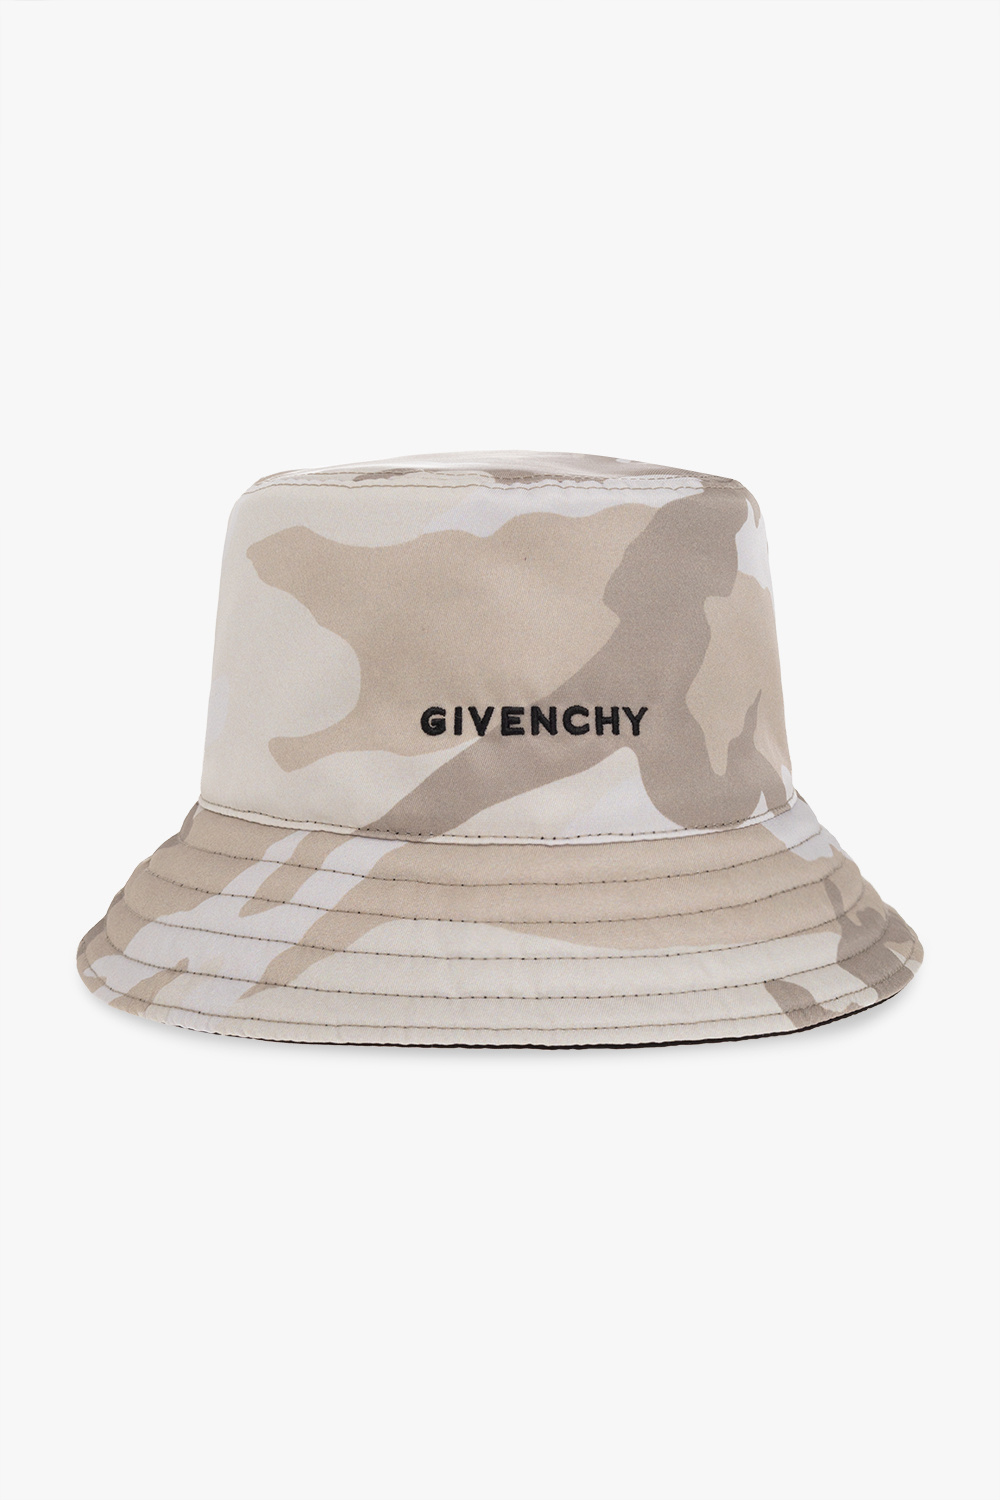 Givenchy givenchy logo applique t shirt item